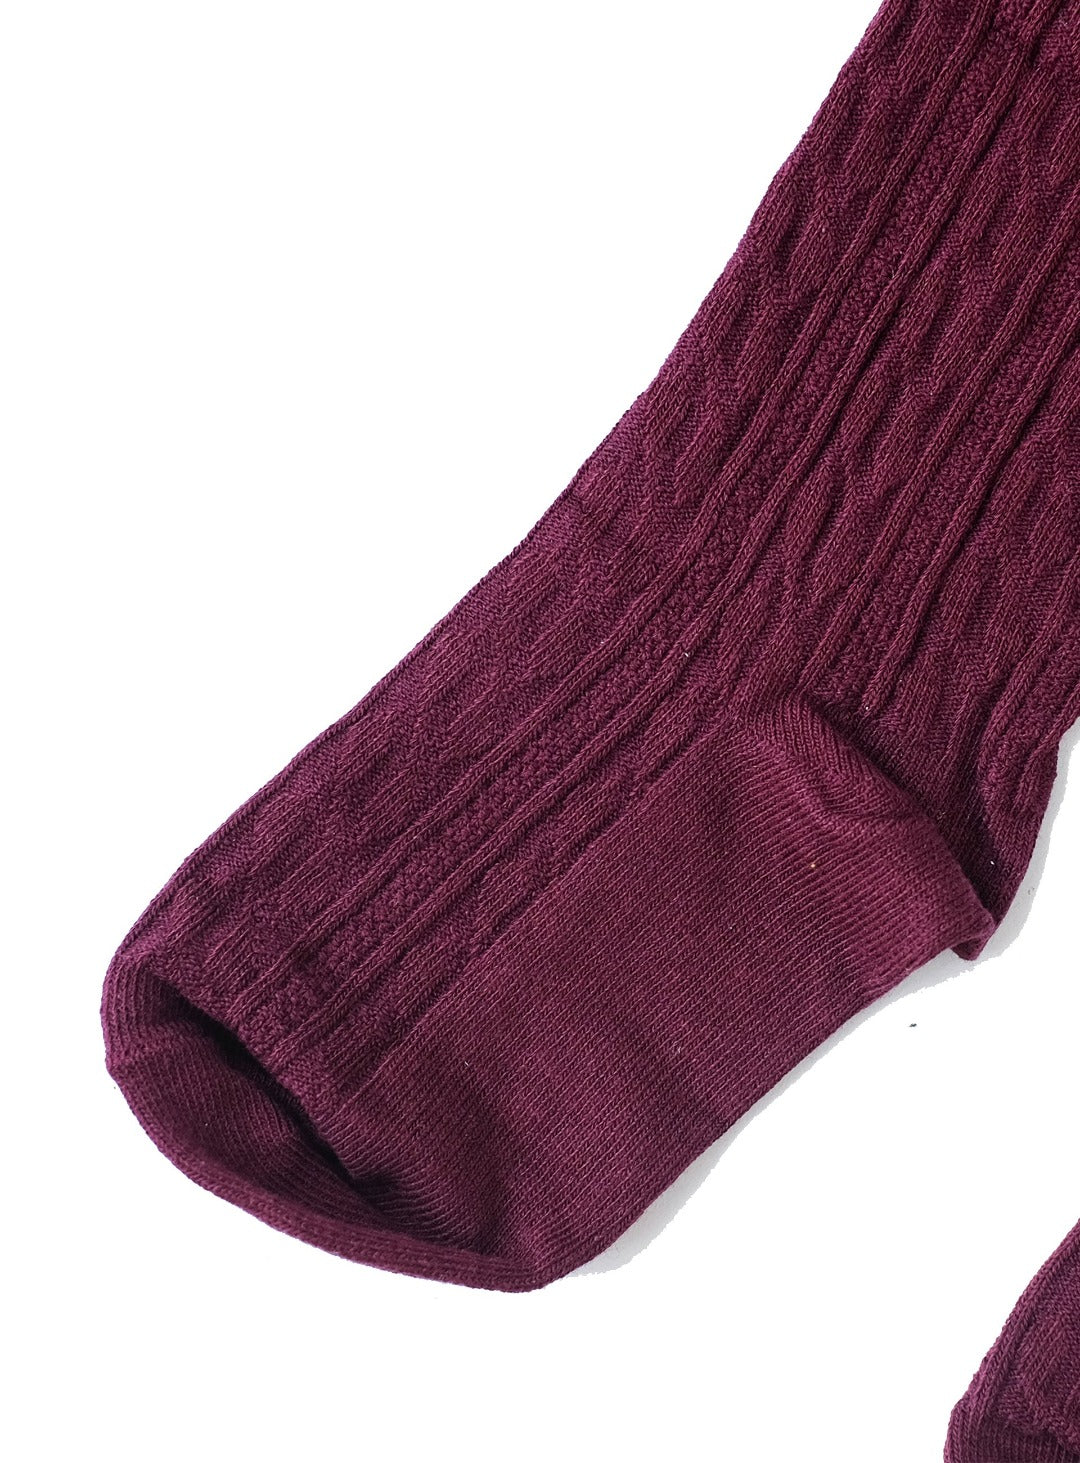 midi length red ruby socks